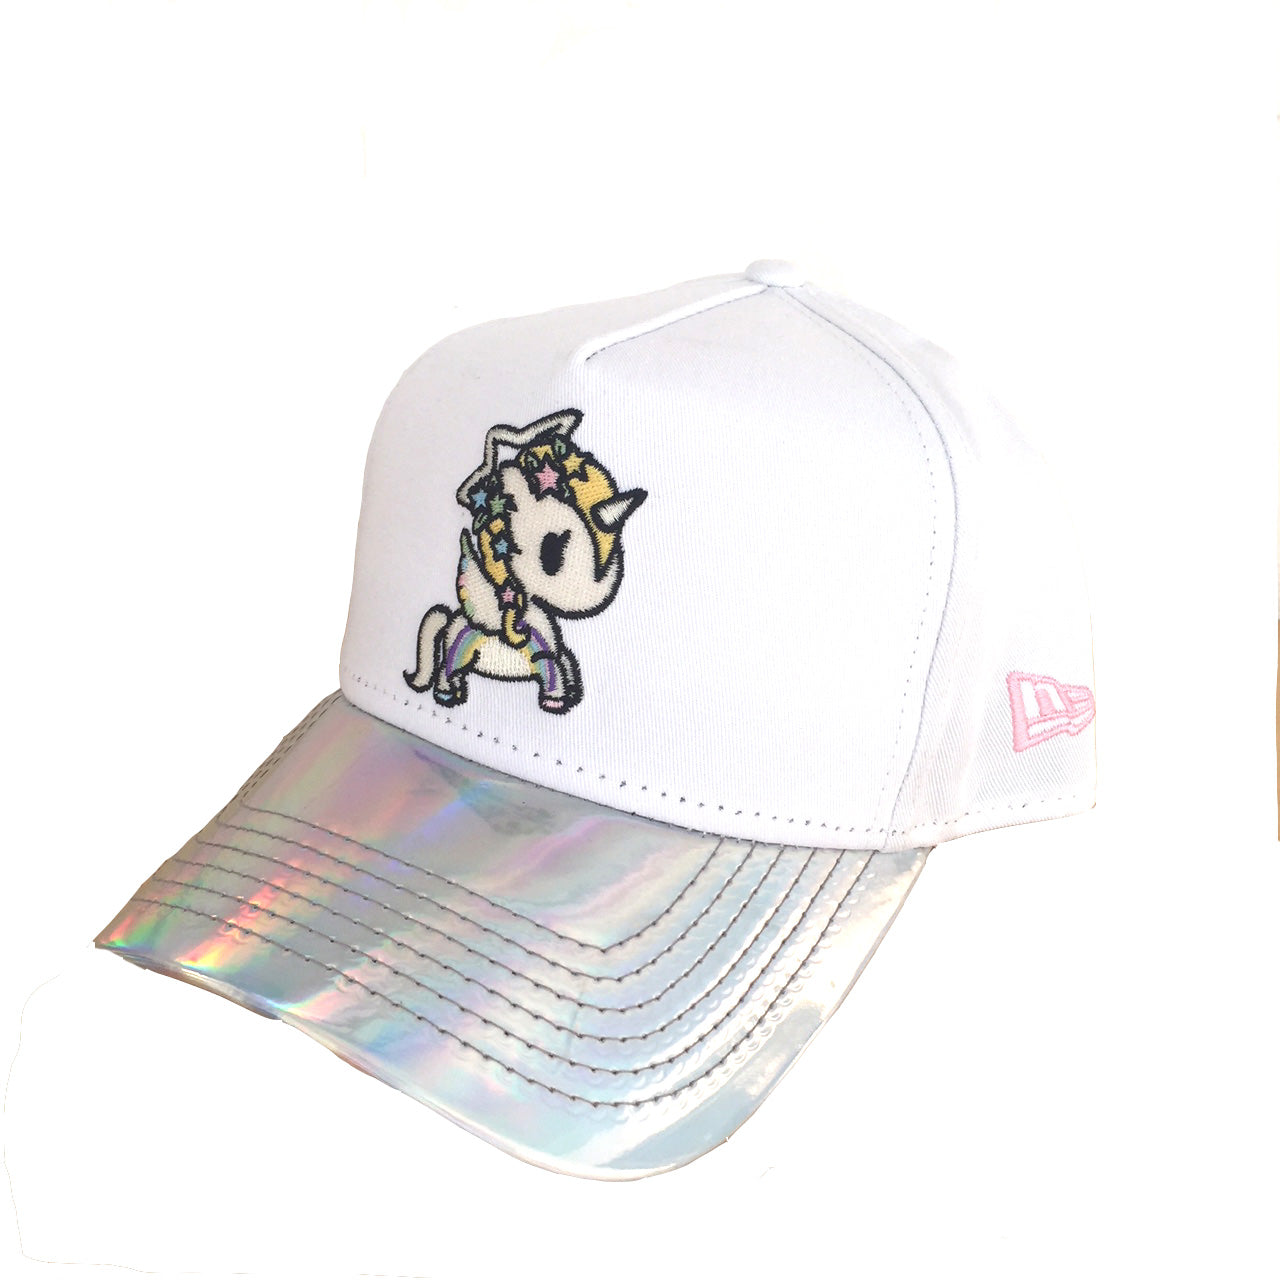 tokidoki - Fantasy Holograph Snapback Hat, White